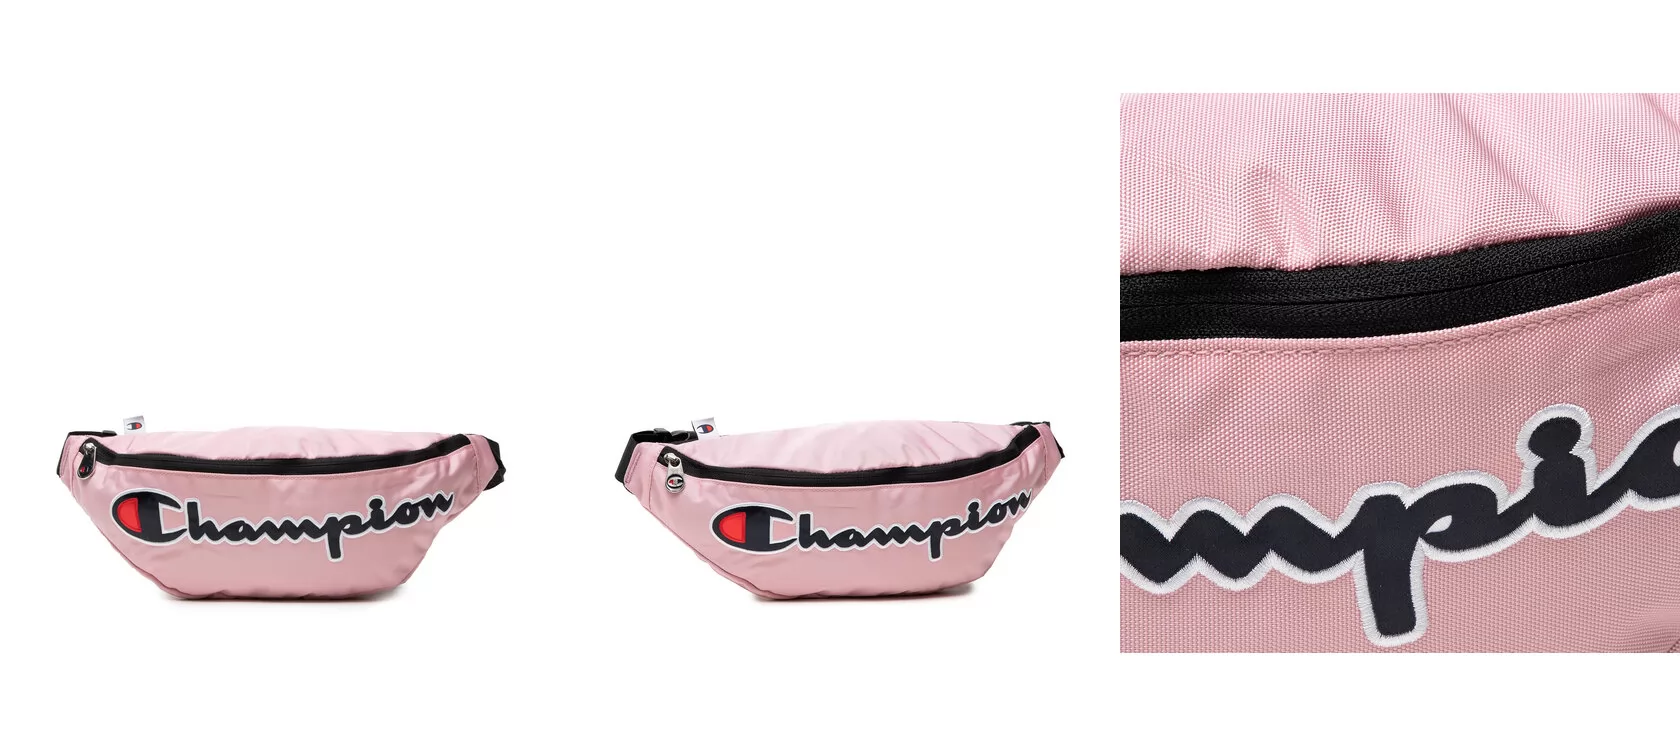 Champion Saszetka nerka Belt Bag 804819-S21-PS024 Różowy